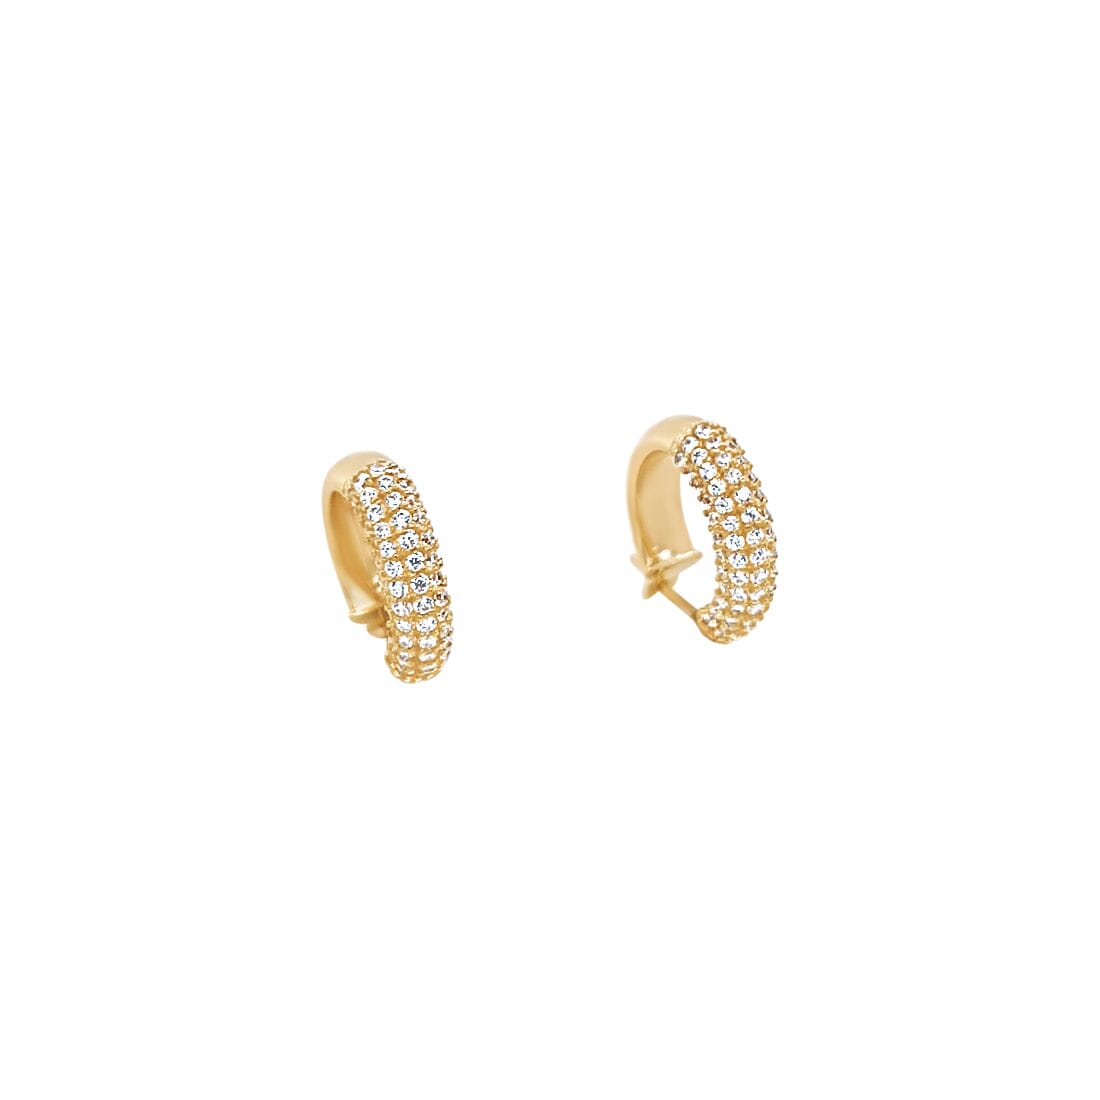 10mm Multi Row Hoop Earrings in 9ct Yellow Gold Earrings Bevilles 